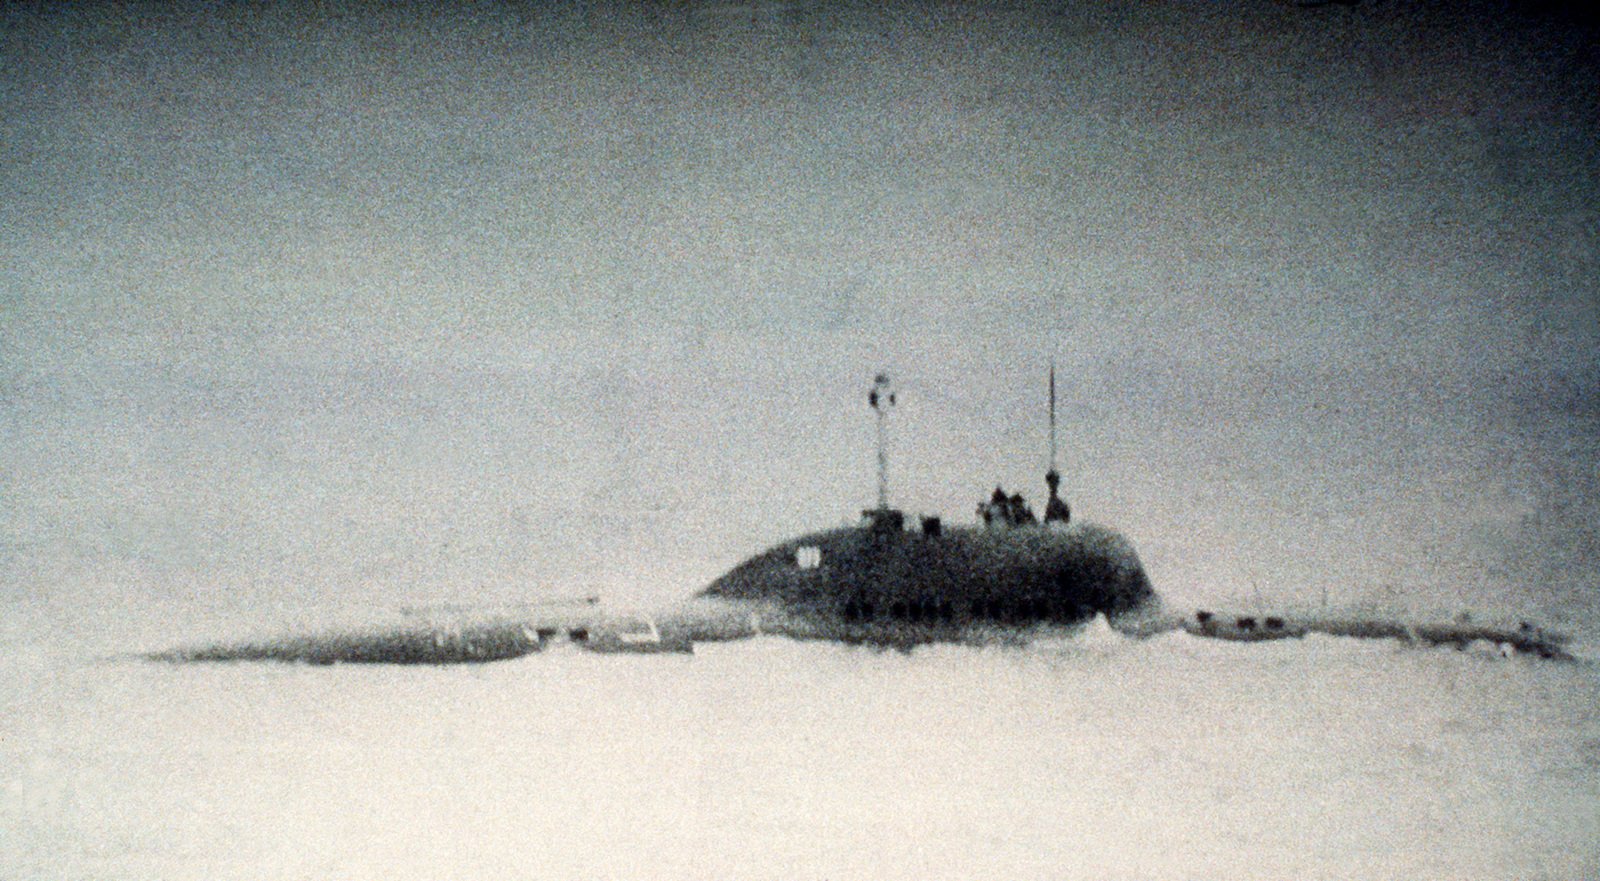 russian submarine under attack